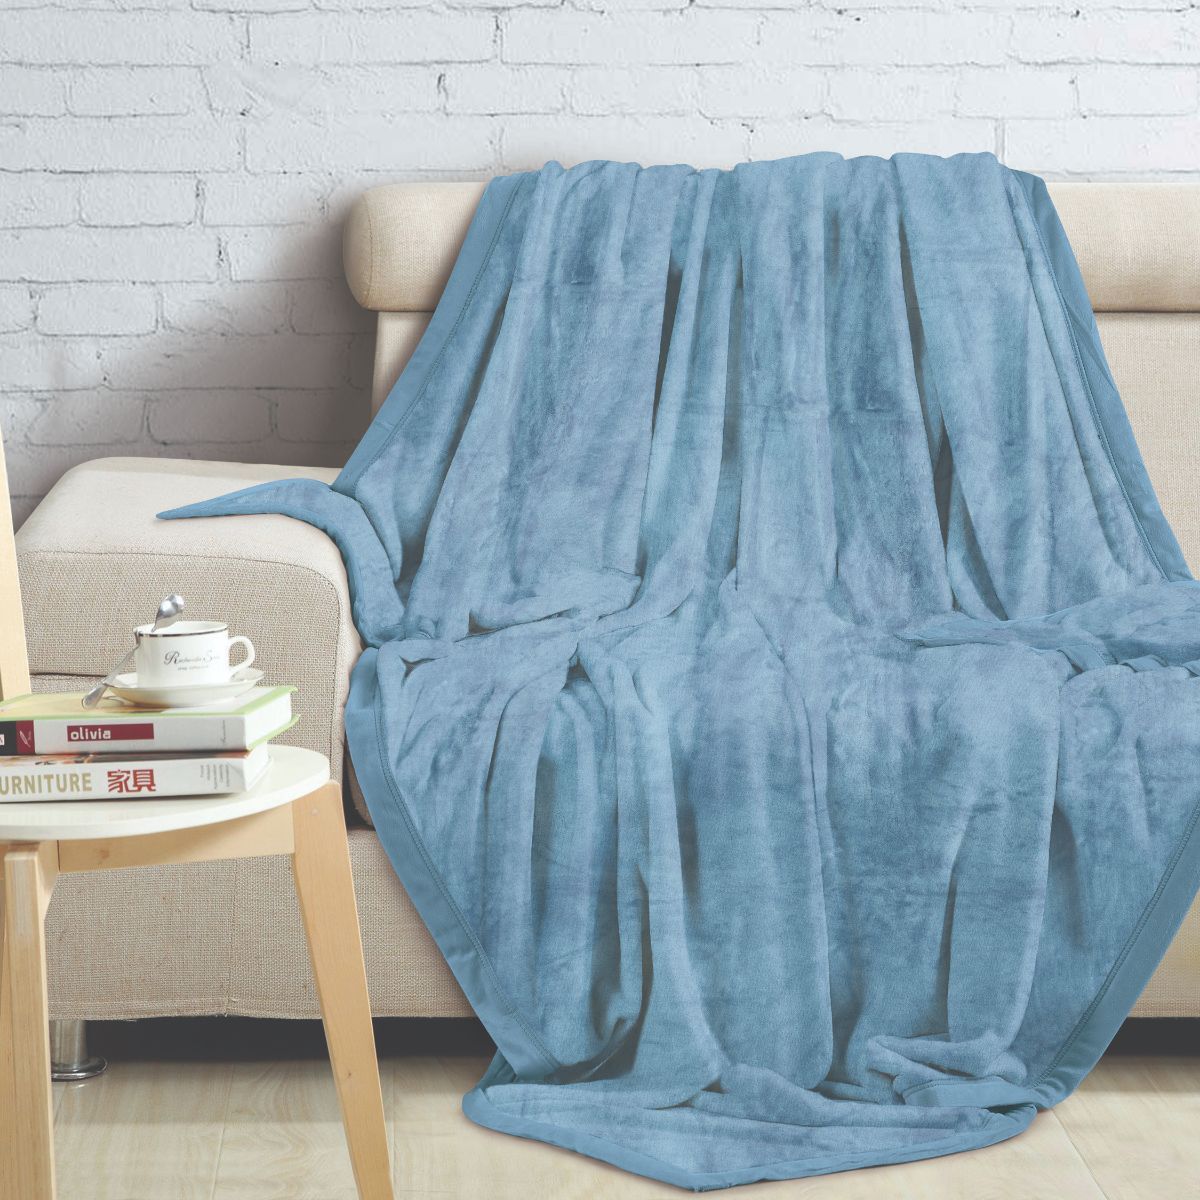 Malako Single Bed Blanket - Heavy Plush Blue Shaded Blanket